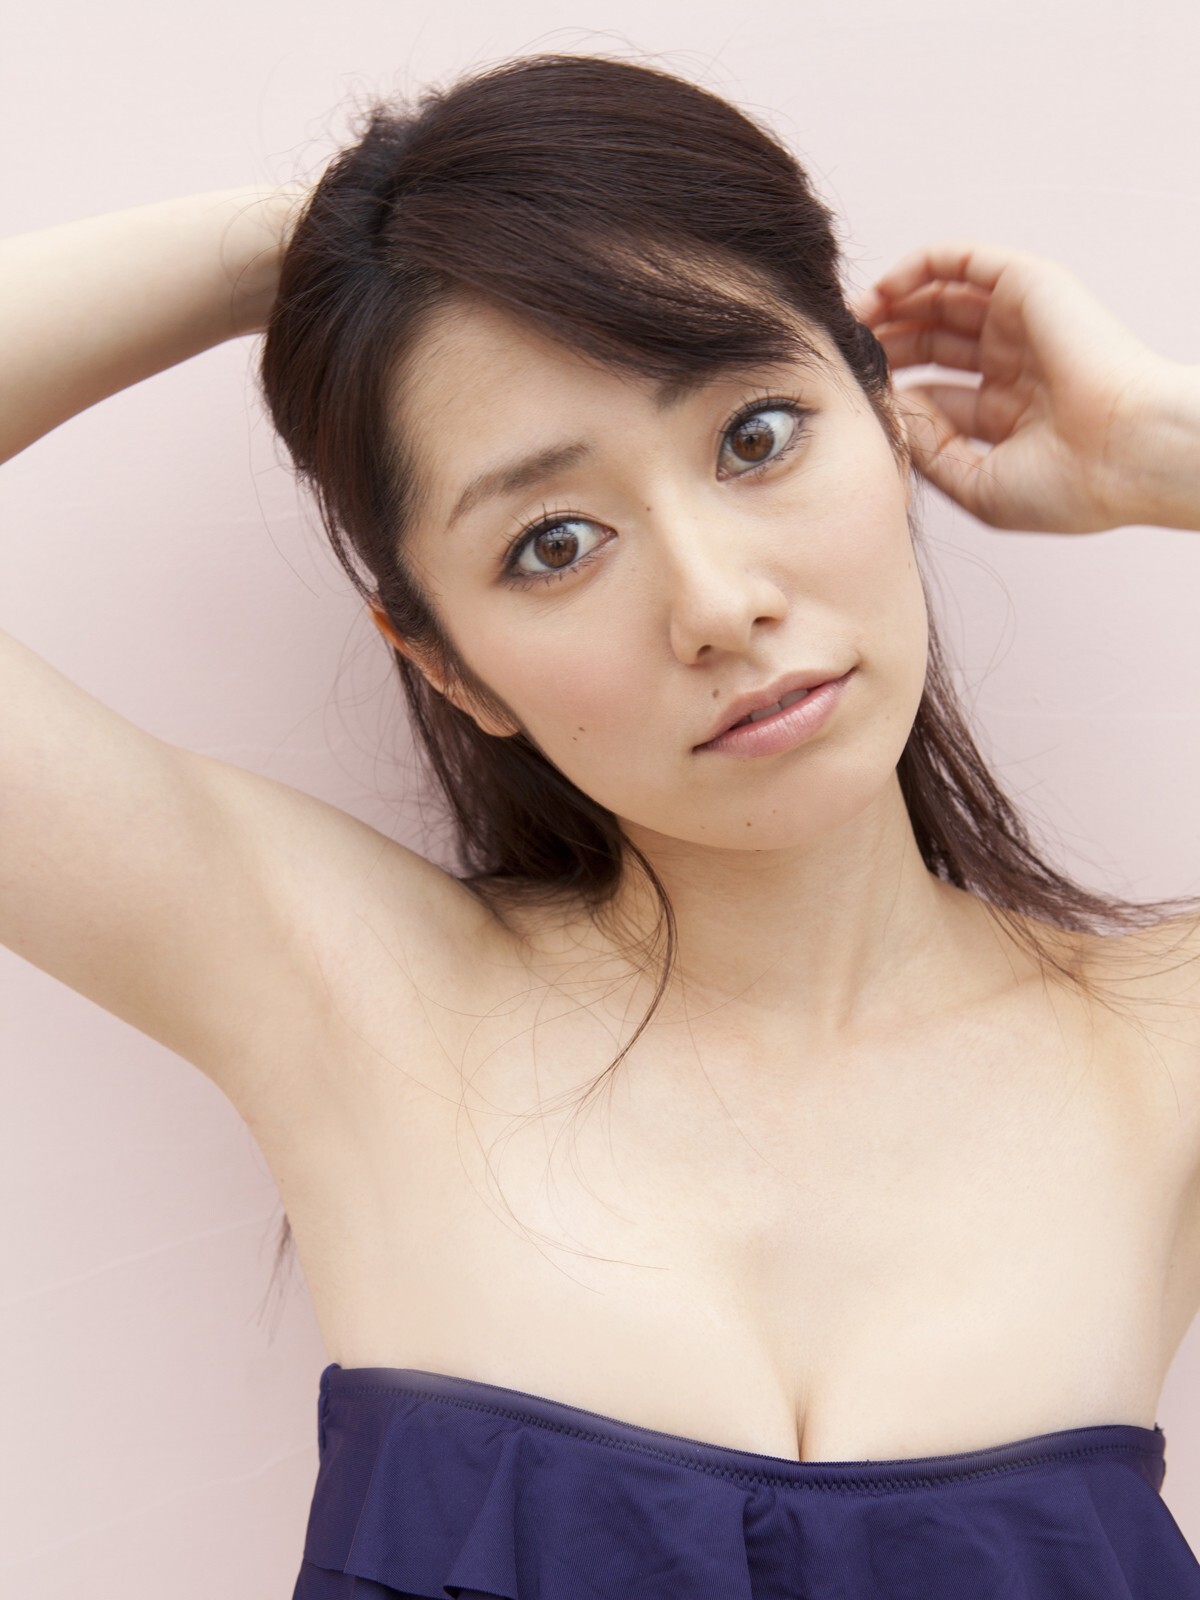 Japanese beauty woman